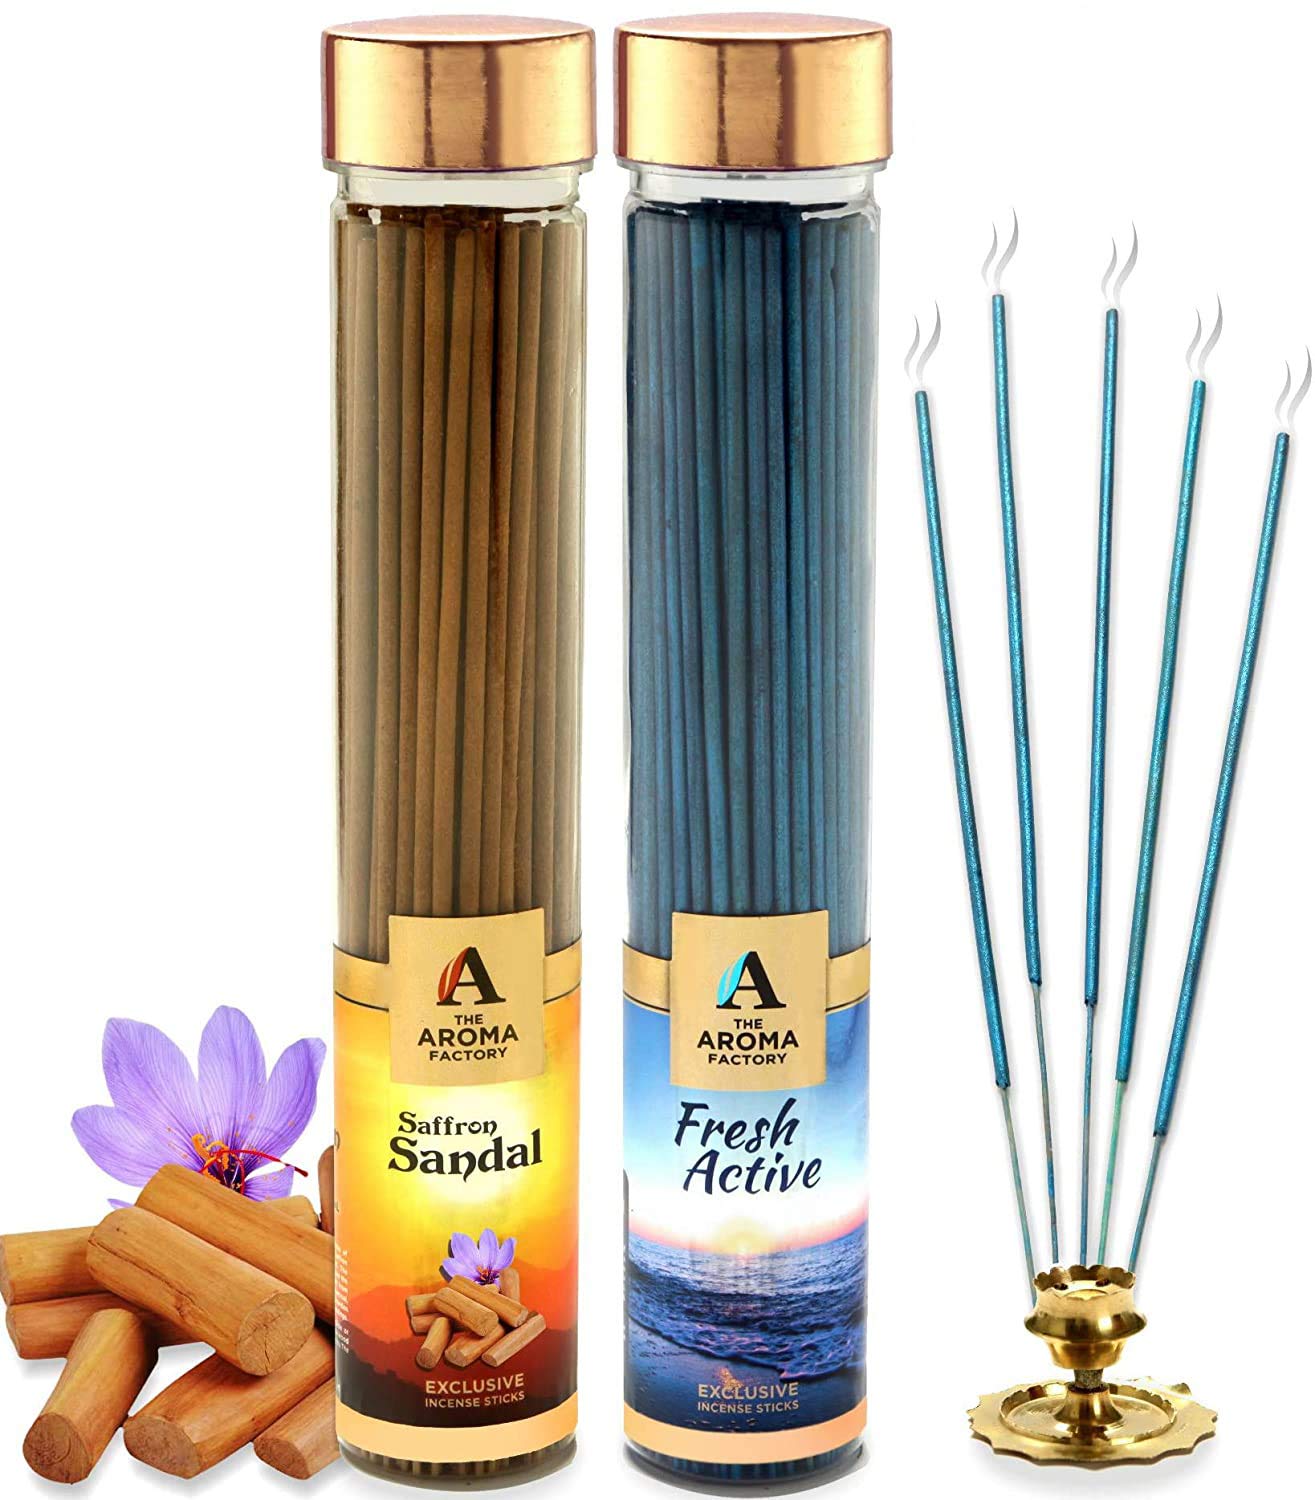 The Aroma Factory Kesar Chandan Saffron Sandal & Fresh Active Agarbatti Incense Sticks (0% Charcoal) Pack of 2 x 100g